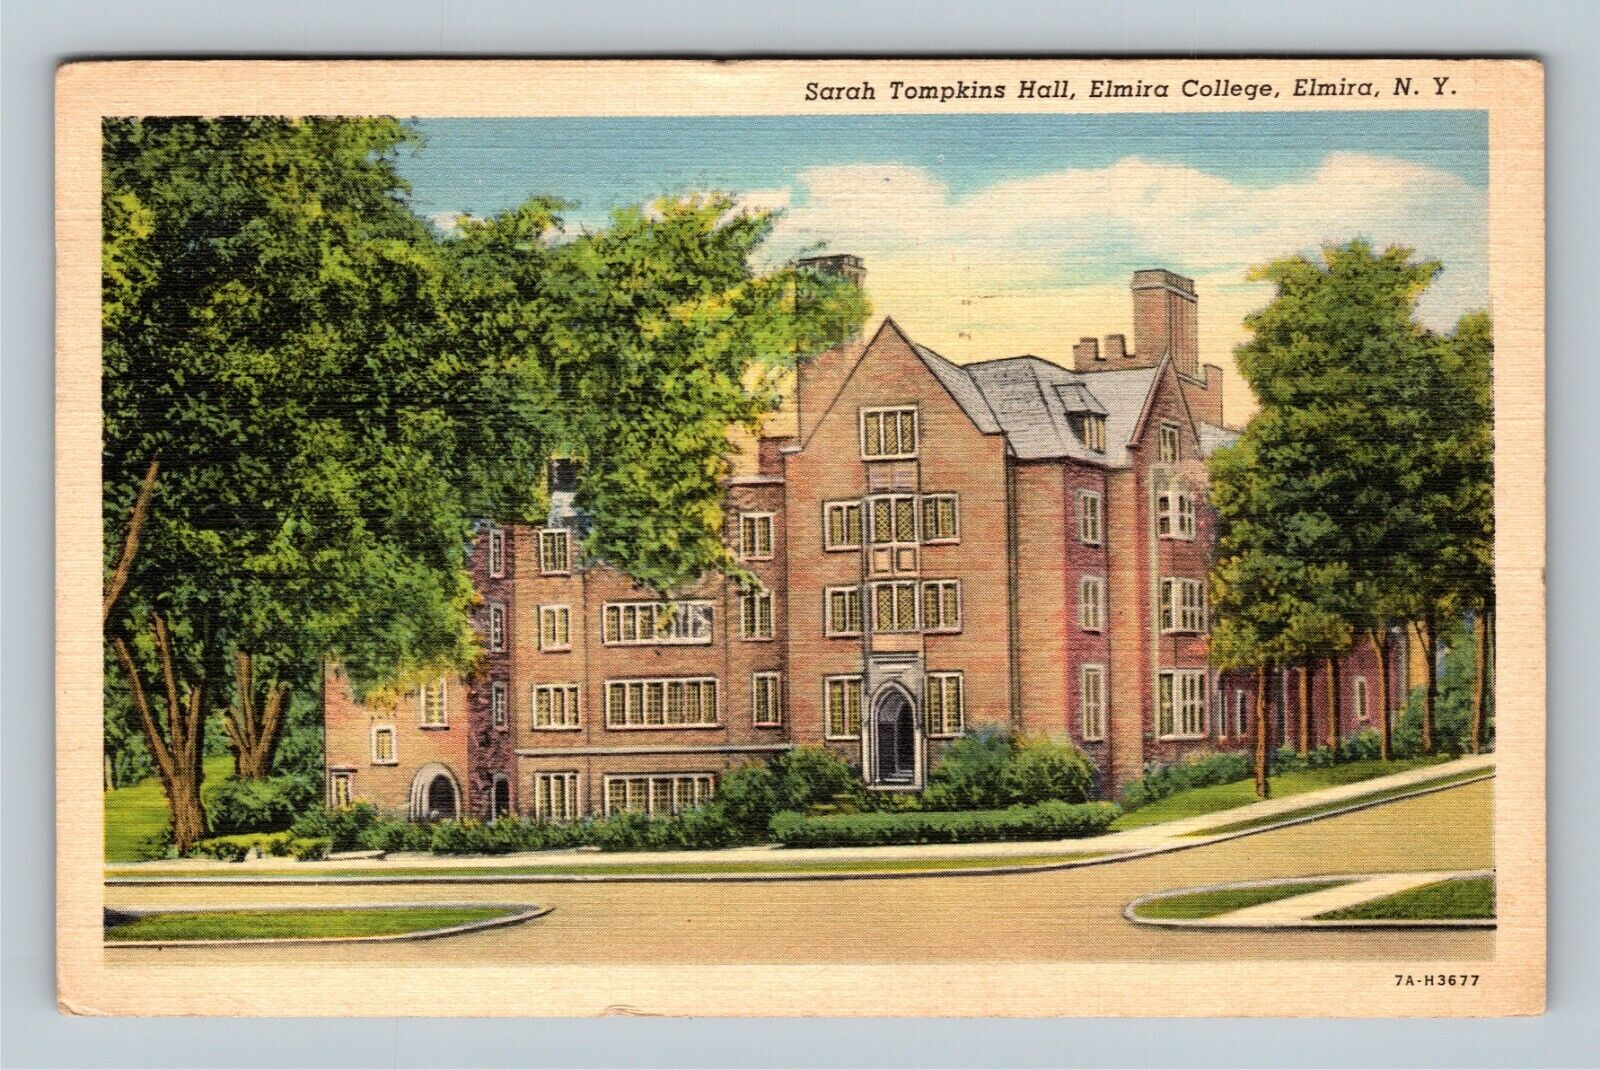 Elmira College, Sarah Tompkins Hall, Campus, New York c1946 Vintage Postcard